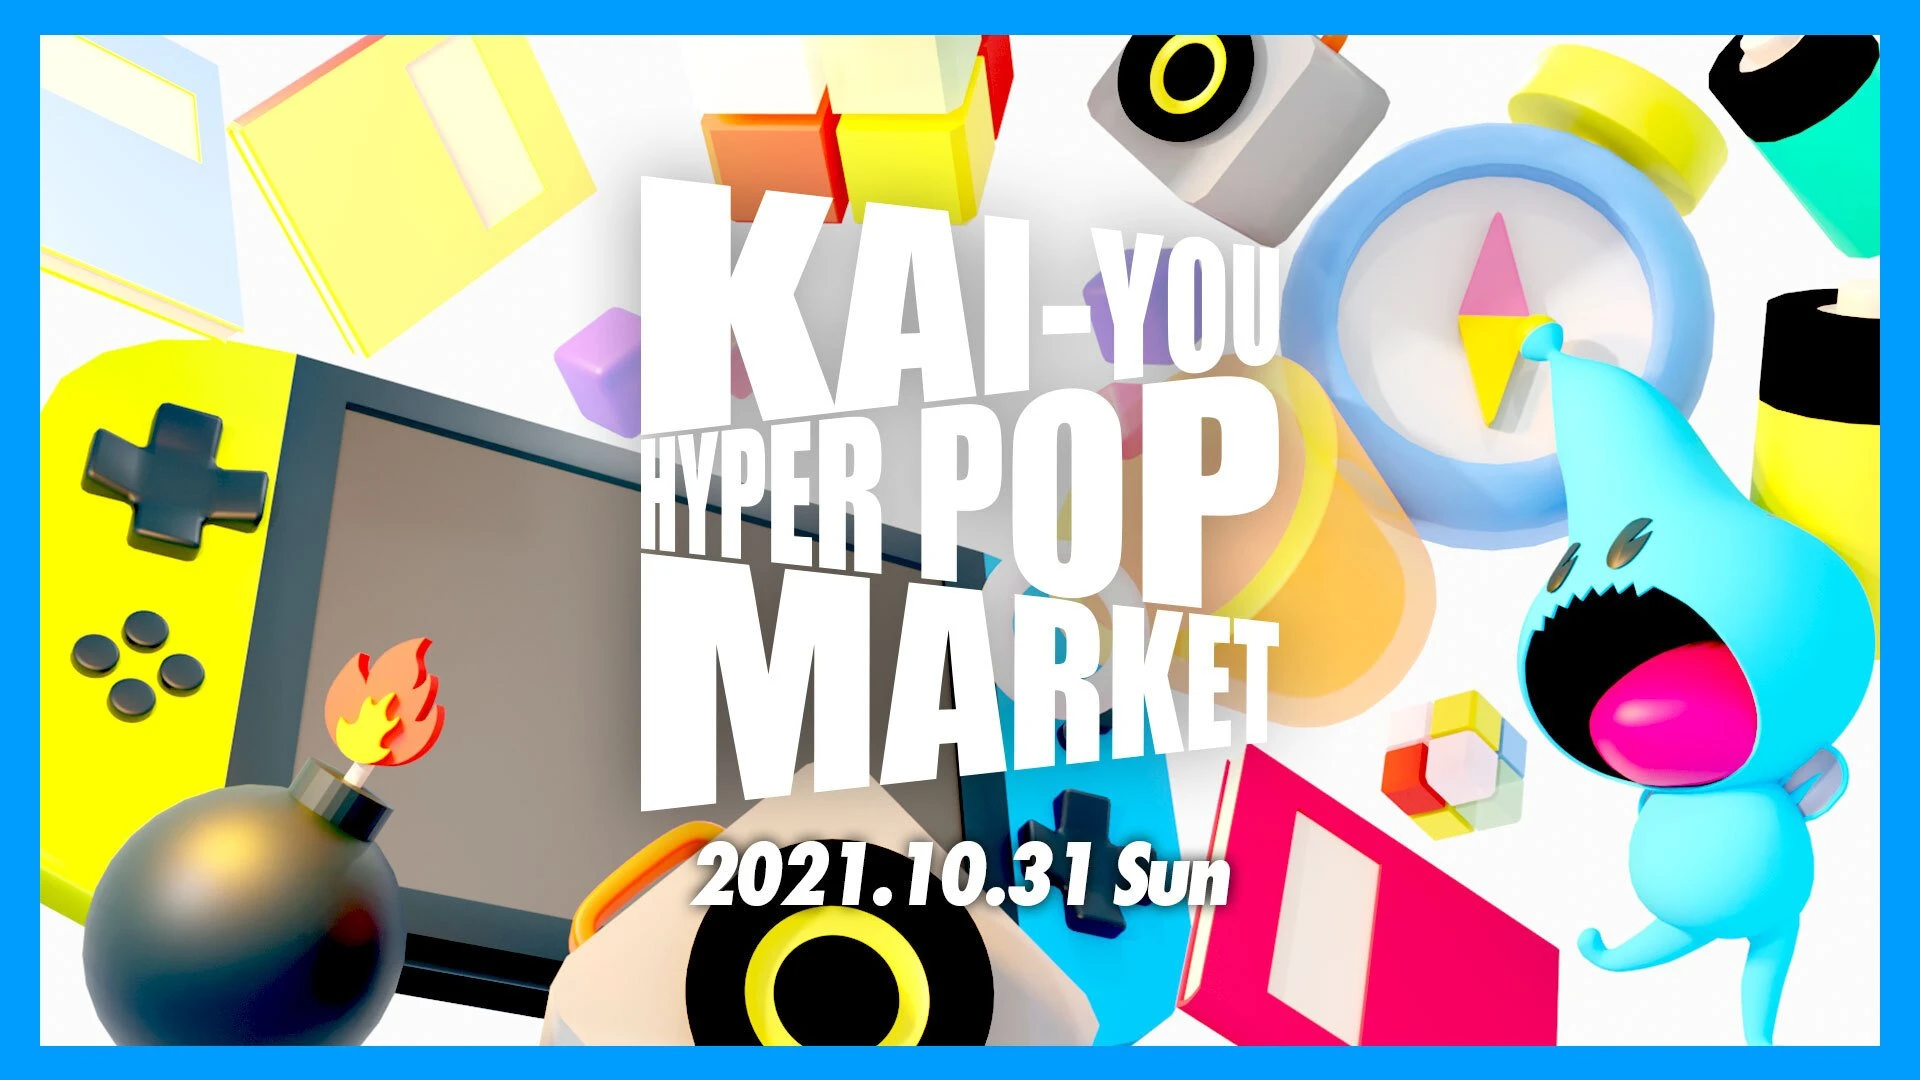 KAI-YOU inc. 10周年イベント「KAI-YOU HYPER POP MARKET」開催のお知らせ